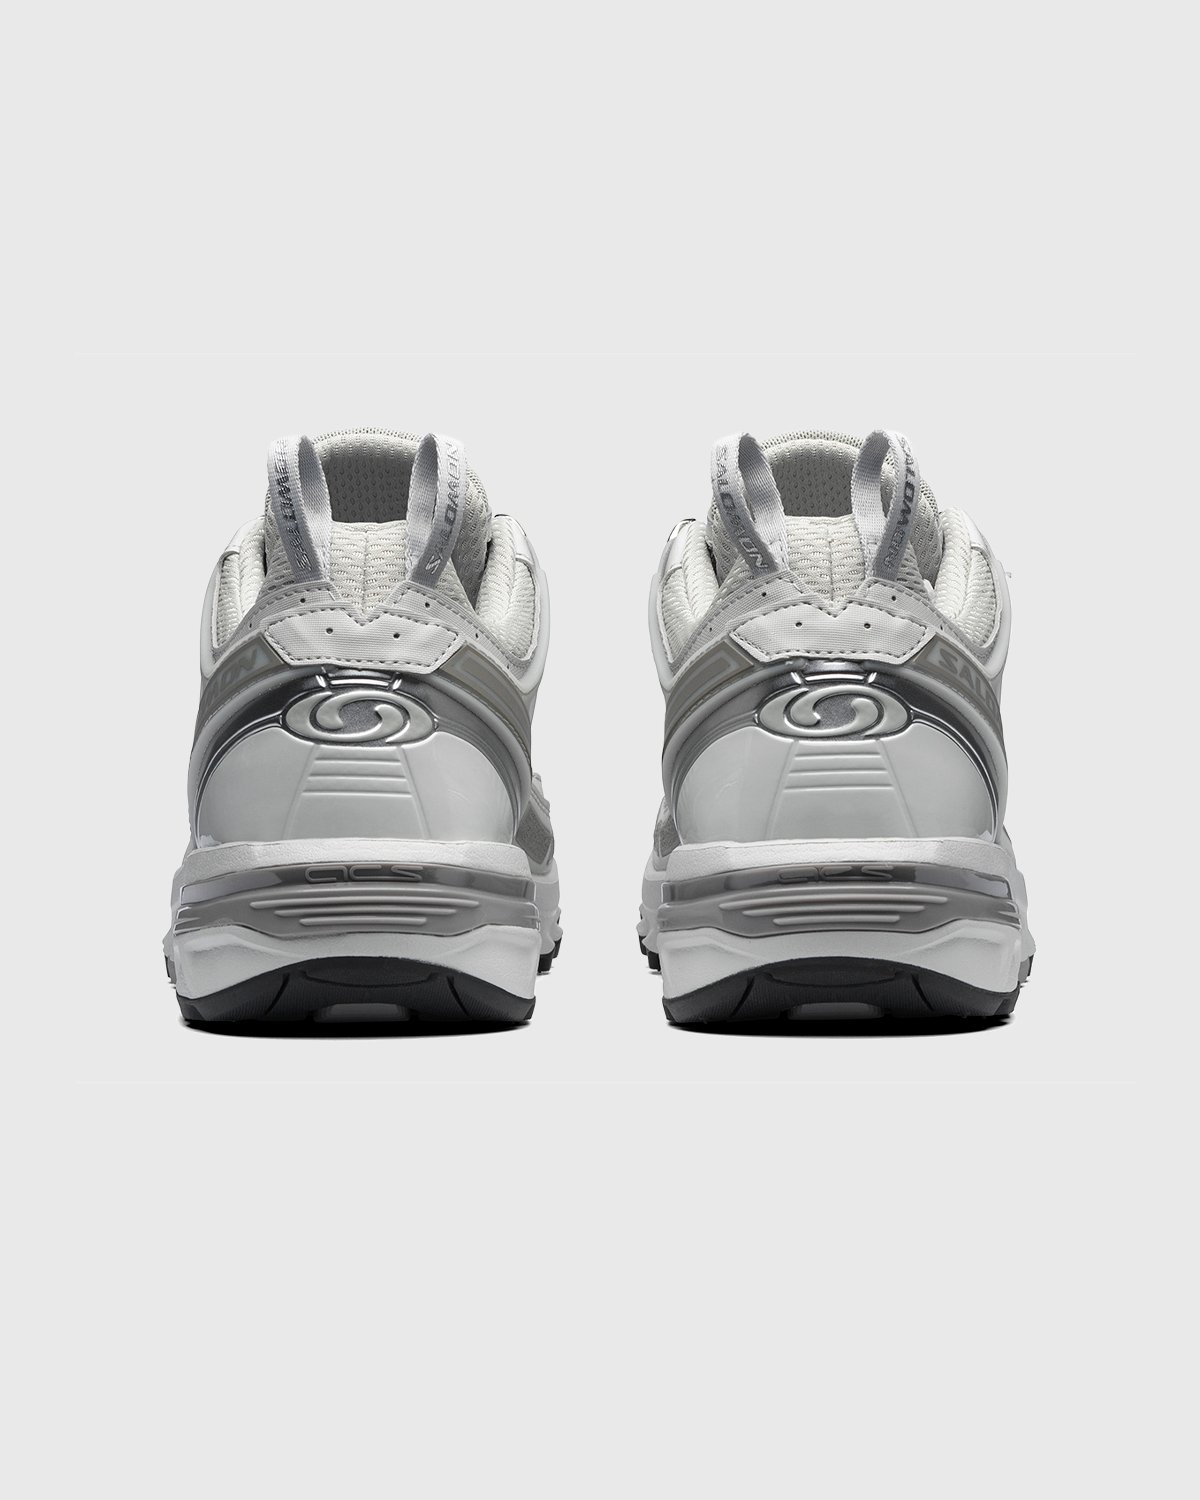 Salomon - ACS Pro Advanced Metal Frost Grey Silver Metallic X - Footwear - Grey - Image 5